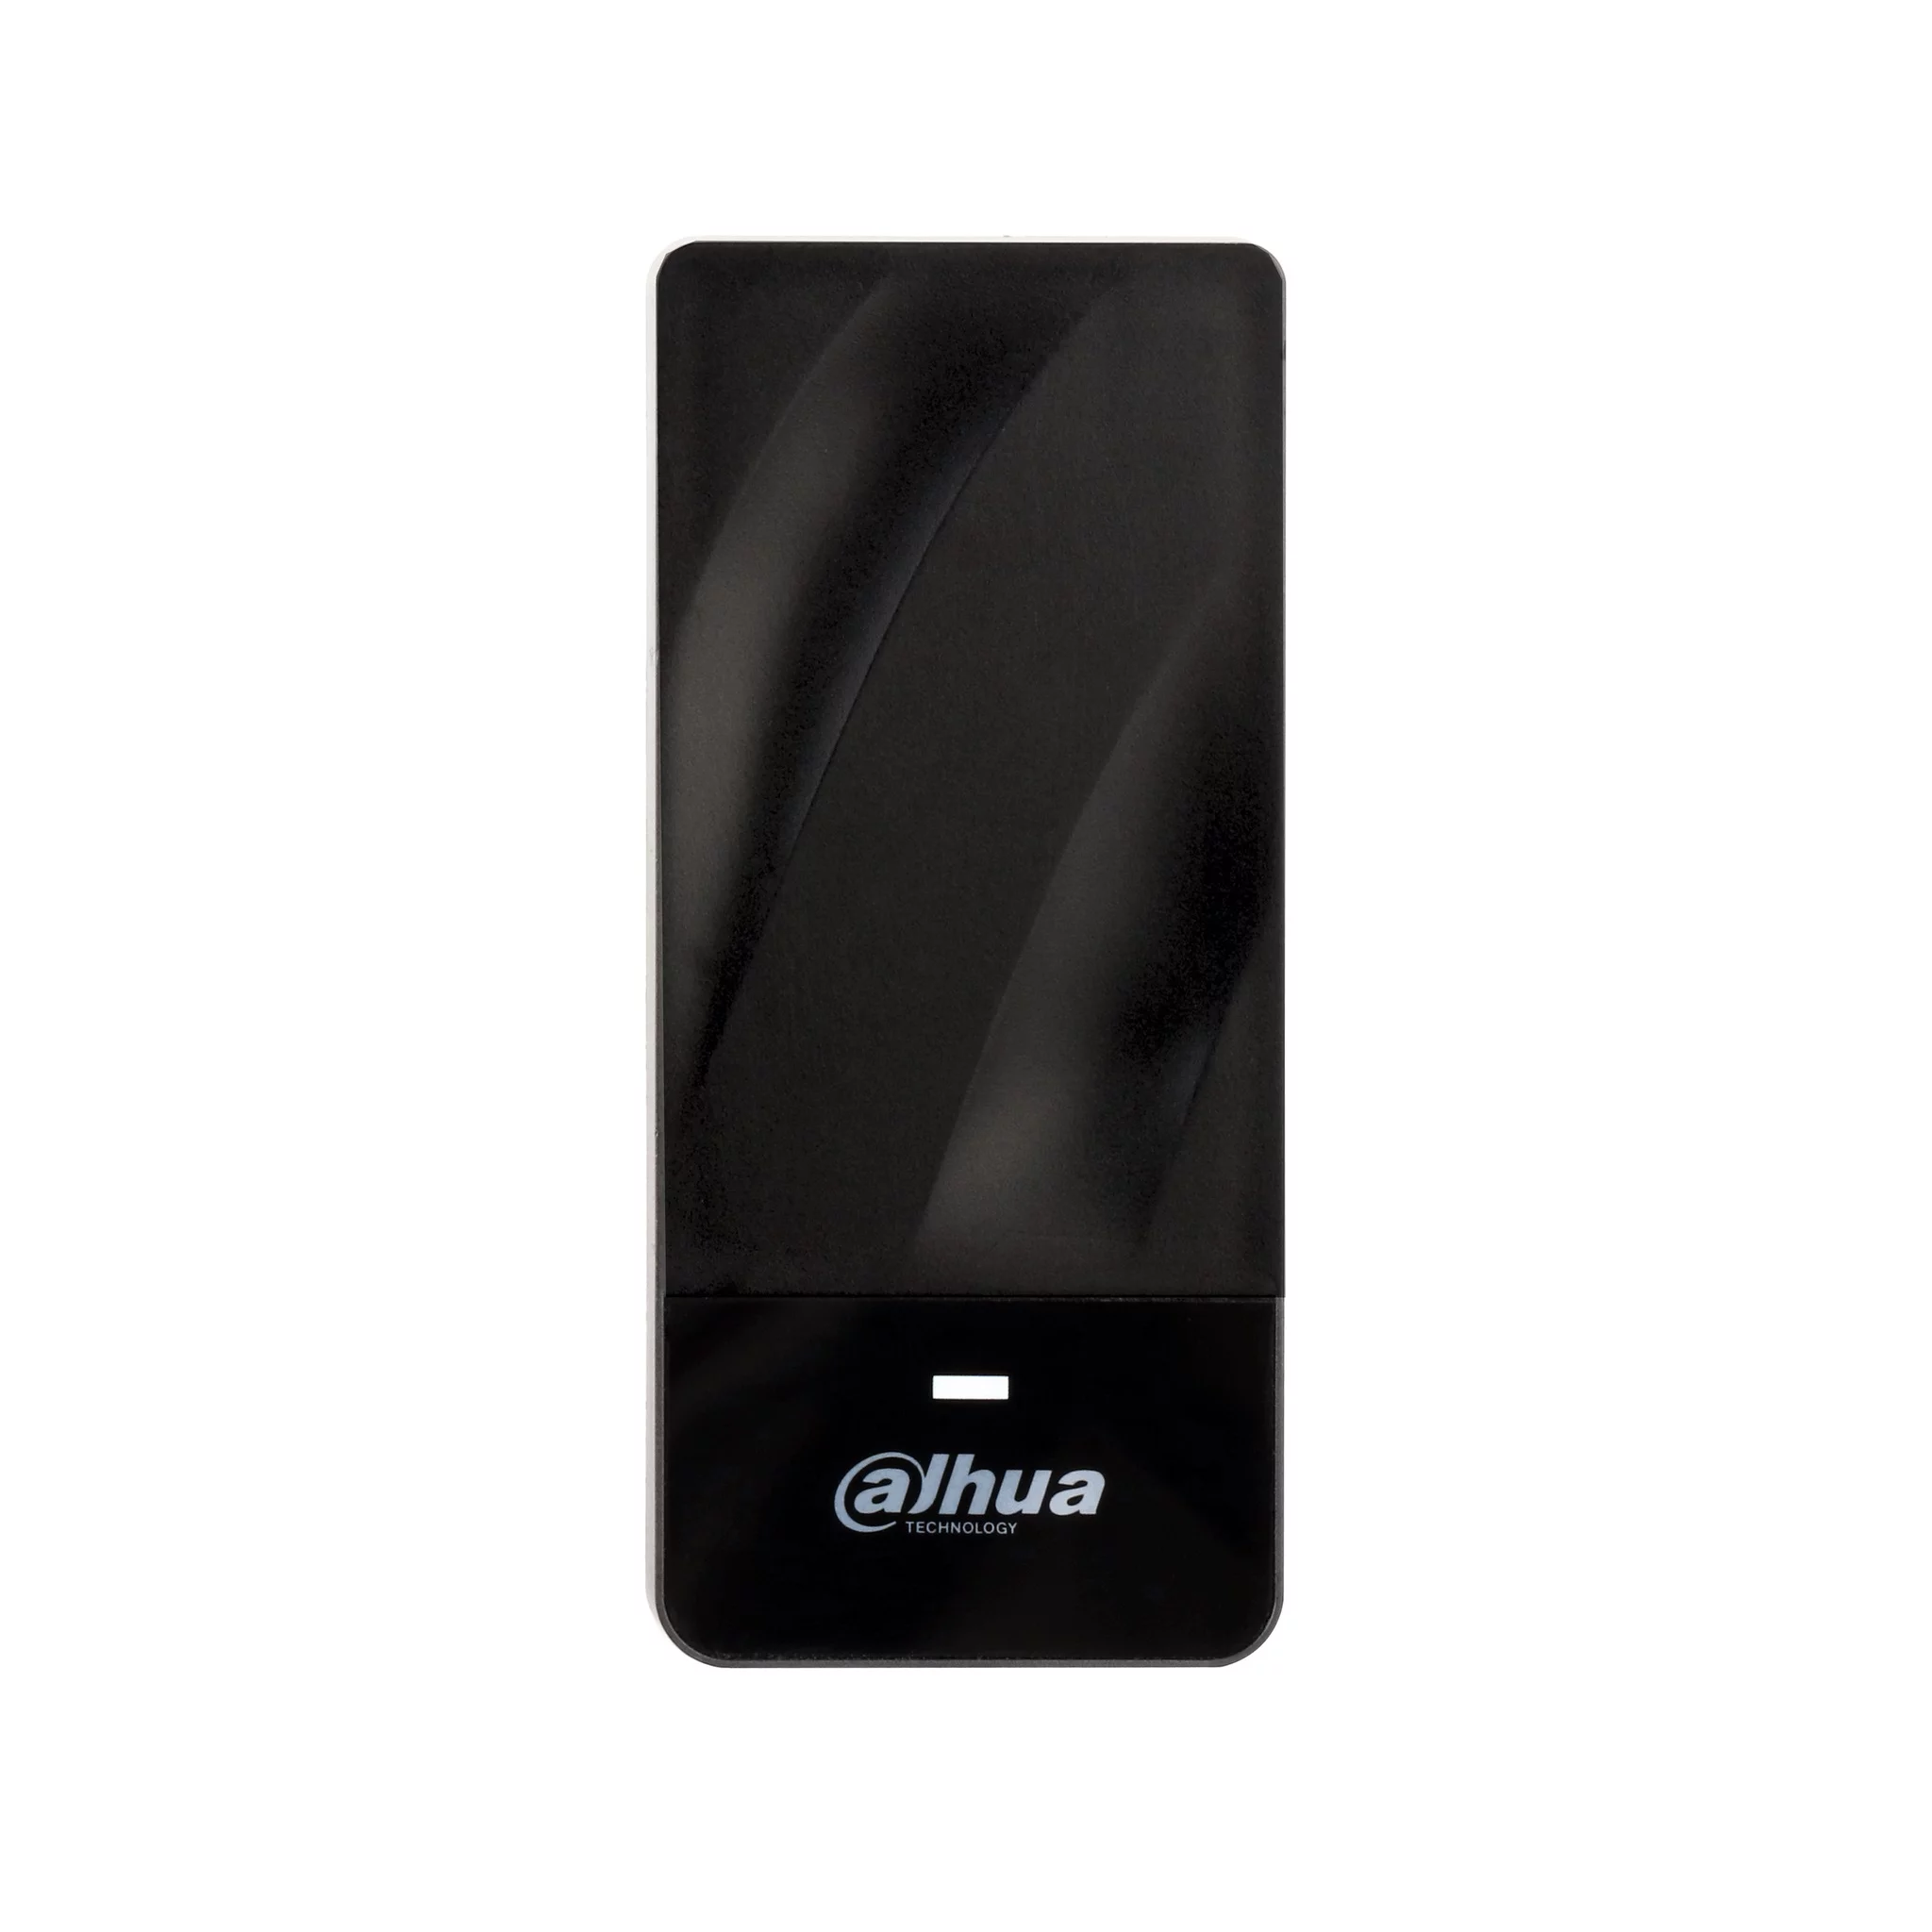 Dahua Waterproof RFID Reader DHI-ASR1200E